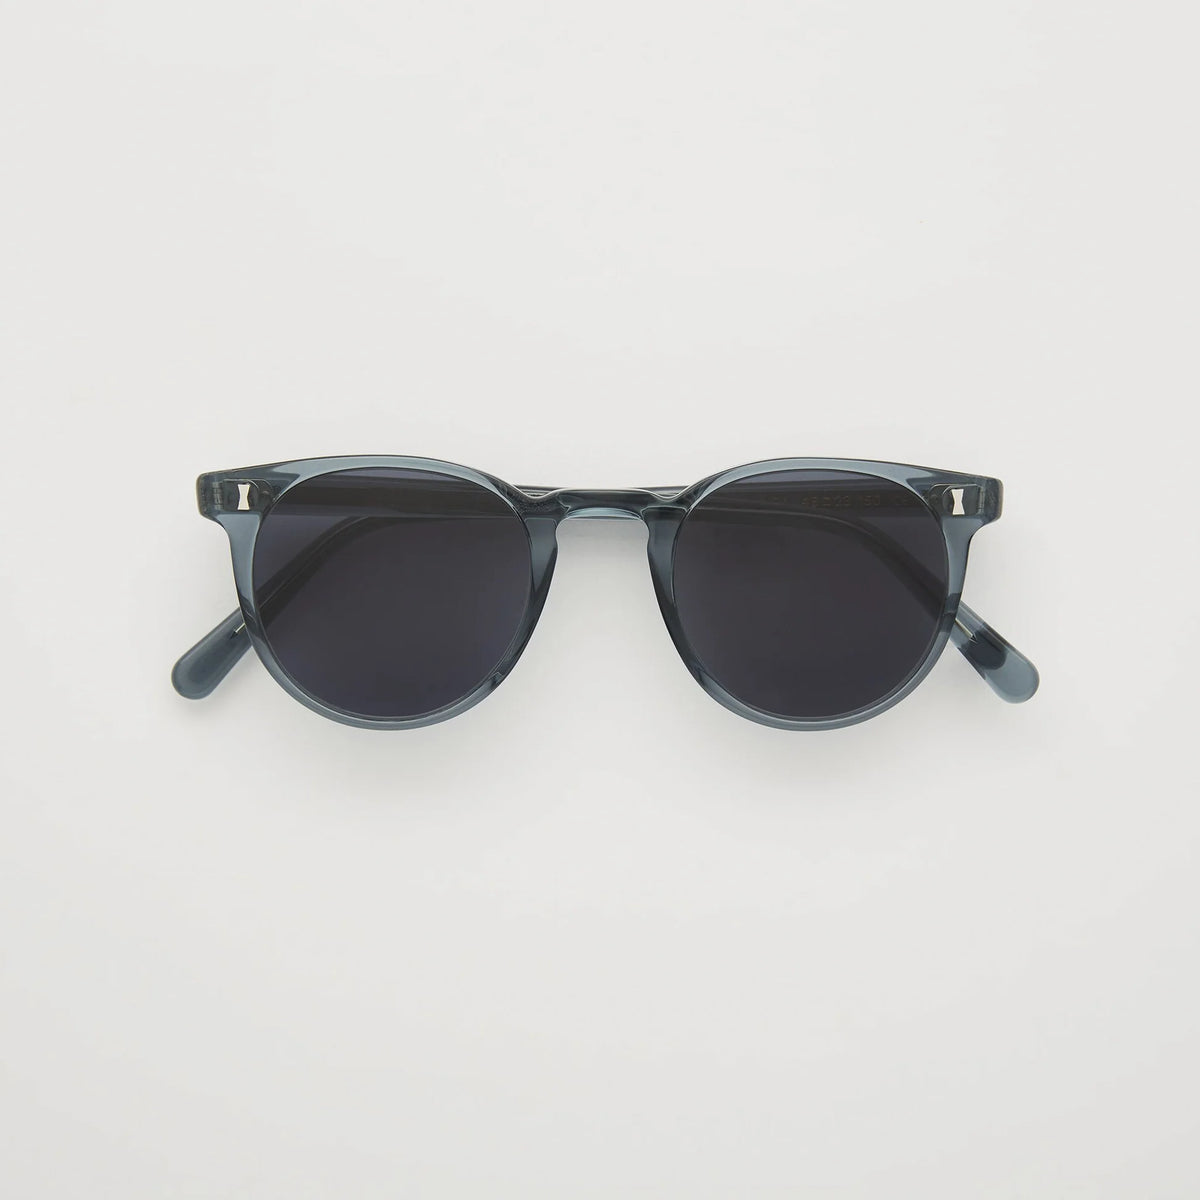 Woad Cubitts Herbrand Sunglasses